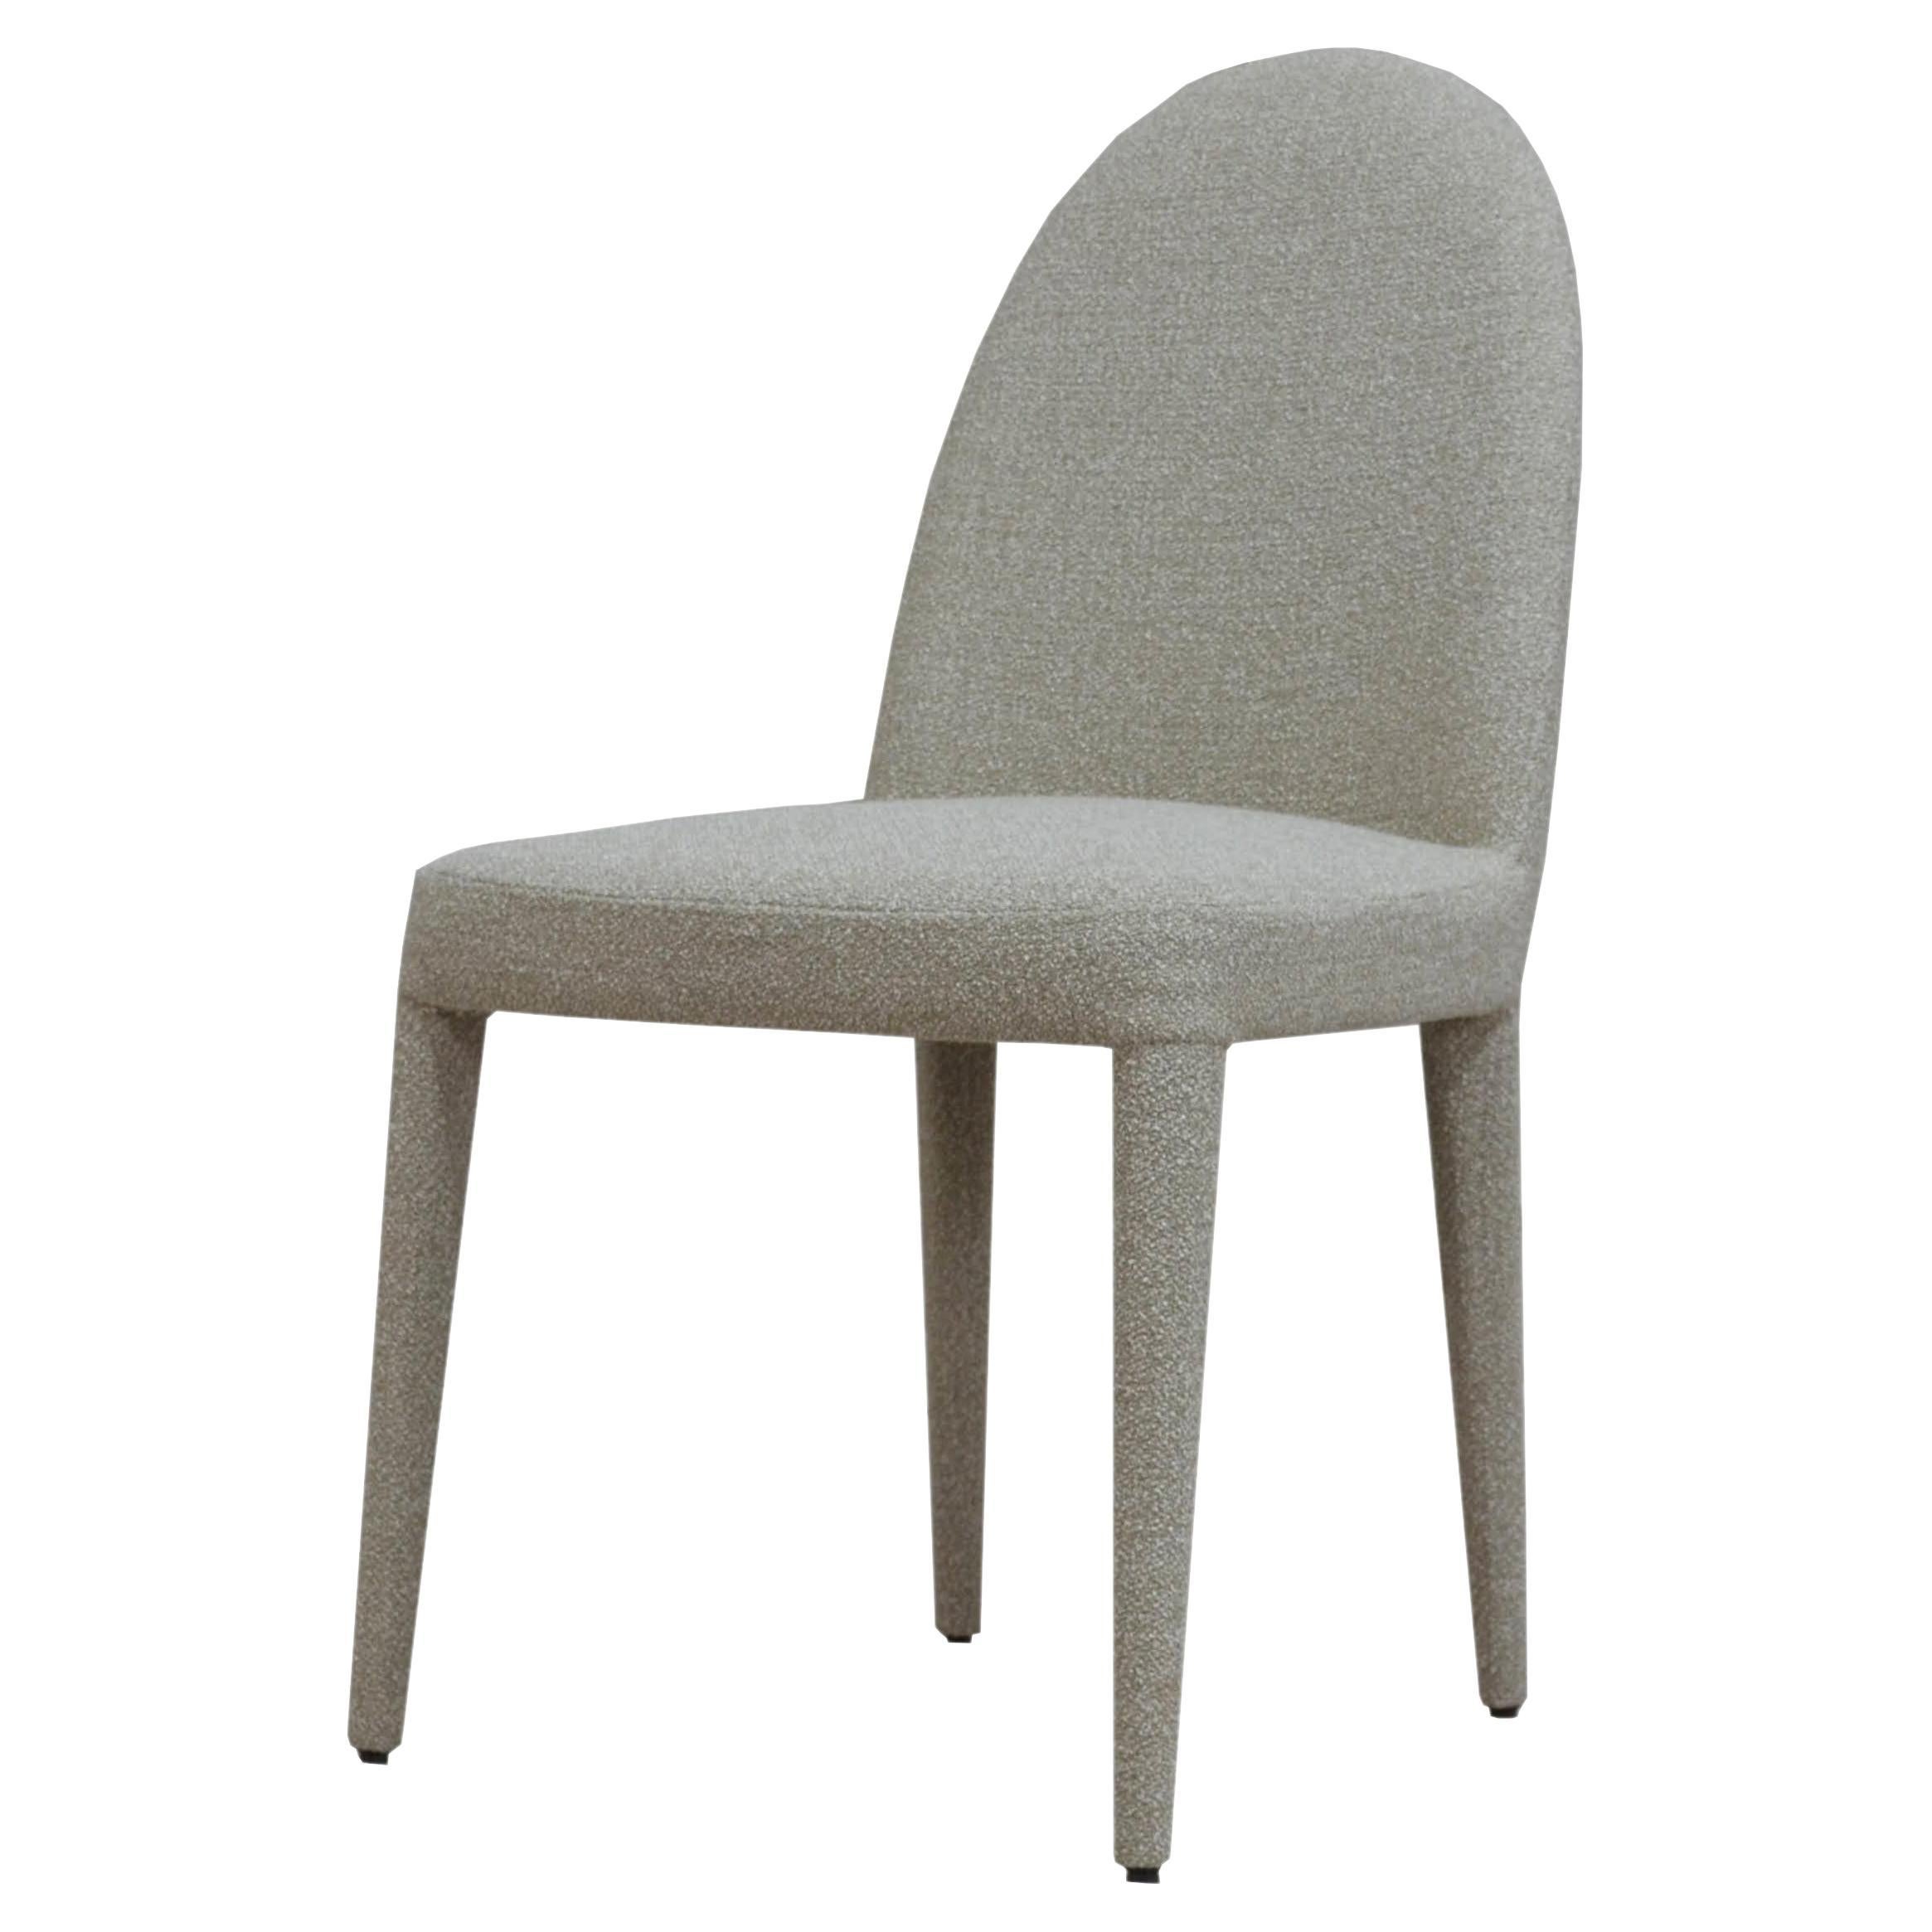 Balzaretti XL Contemporary Upholstered Dining Chair in Torri Lana Boemian Fabric For Sale